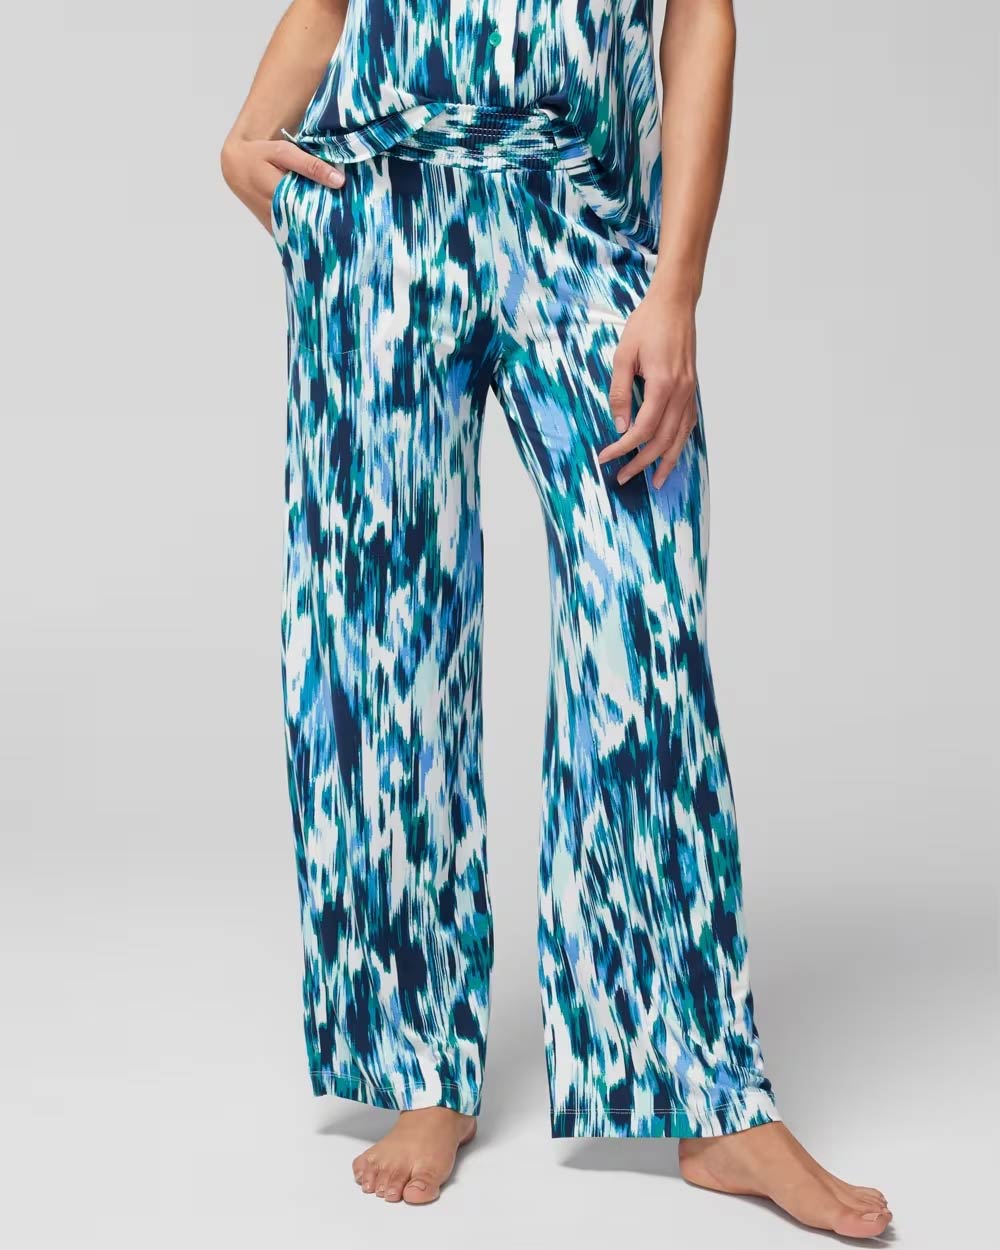 Soma<sup class=st-superscript>®</sup> women’s model wearing blue ikat printed pajama pants.